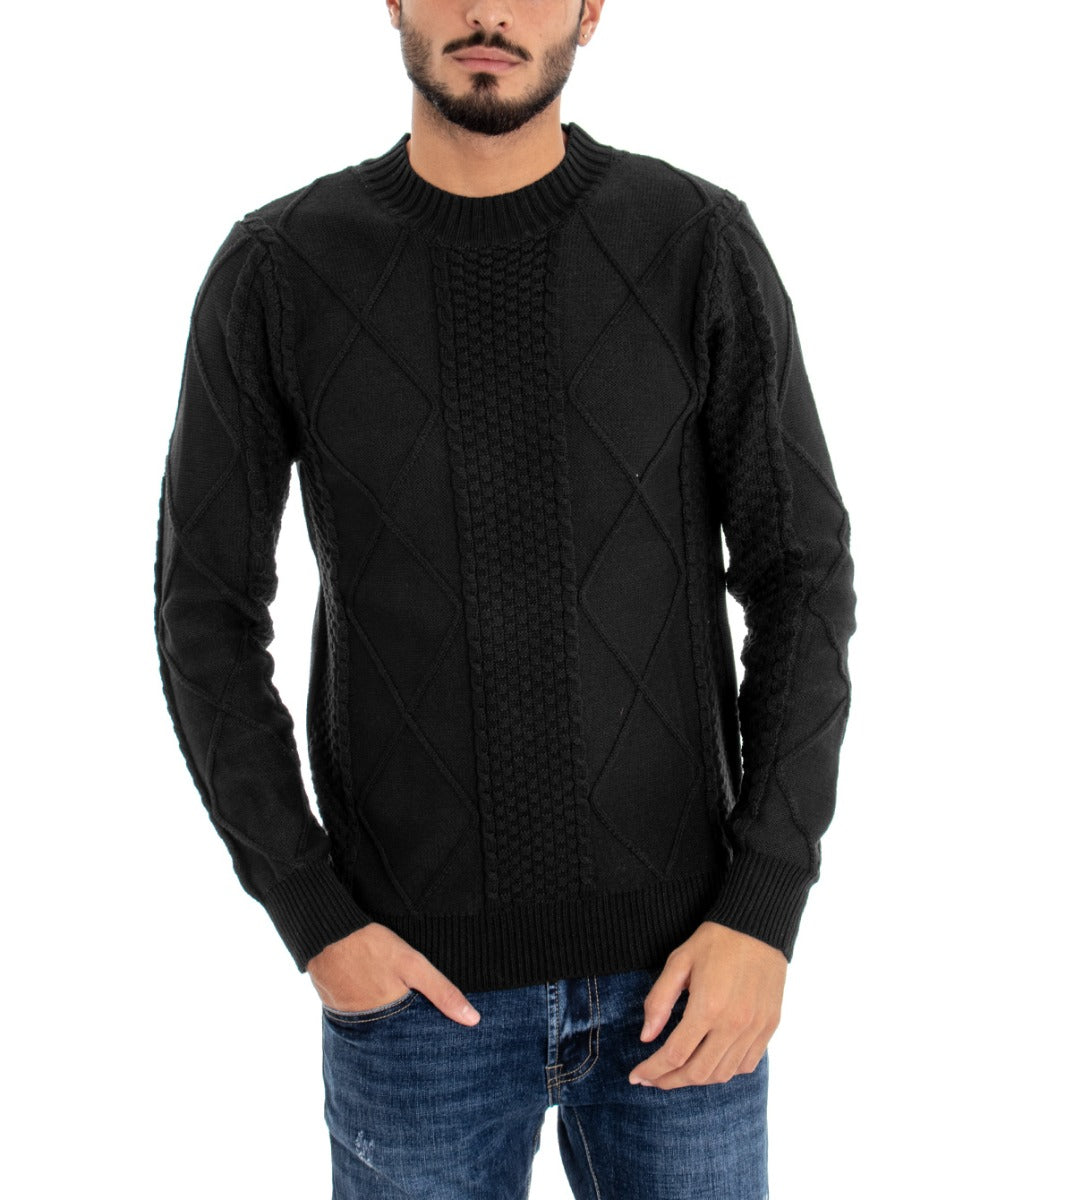 Men's Crew Neck Sweater Diamond Pattern Black Pullover Woven Texture GIOSAL